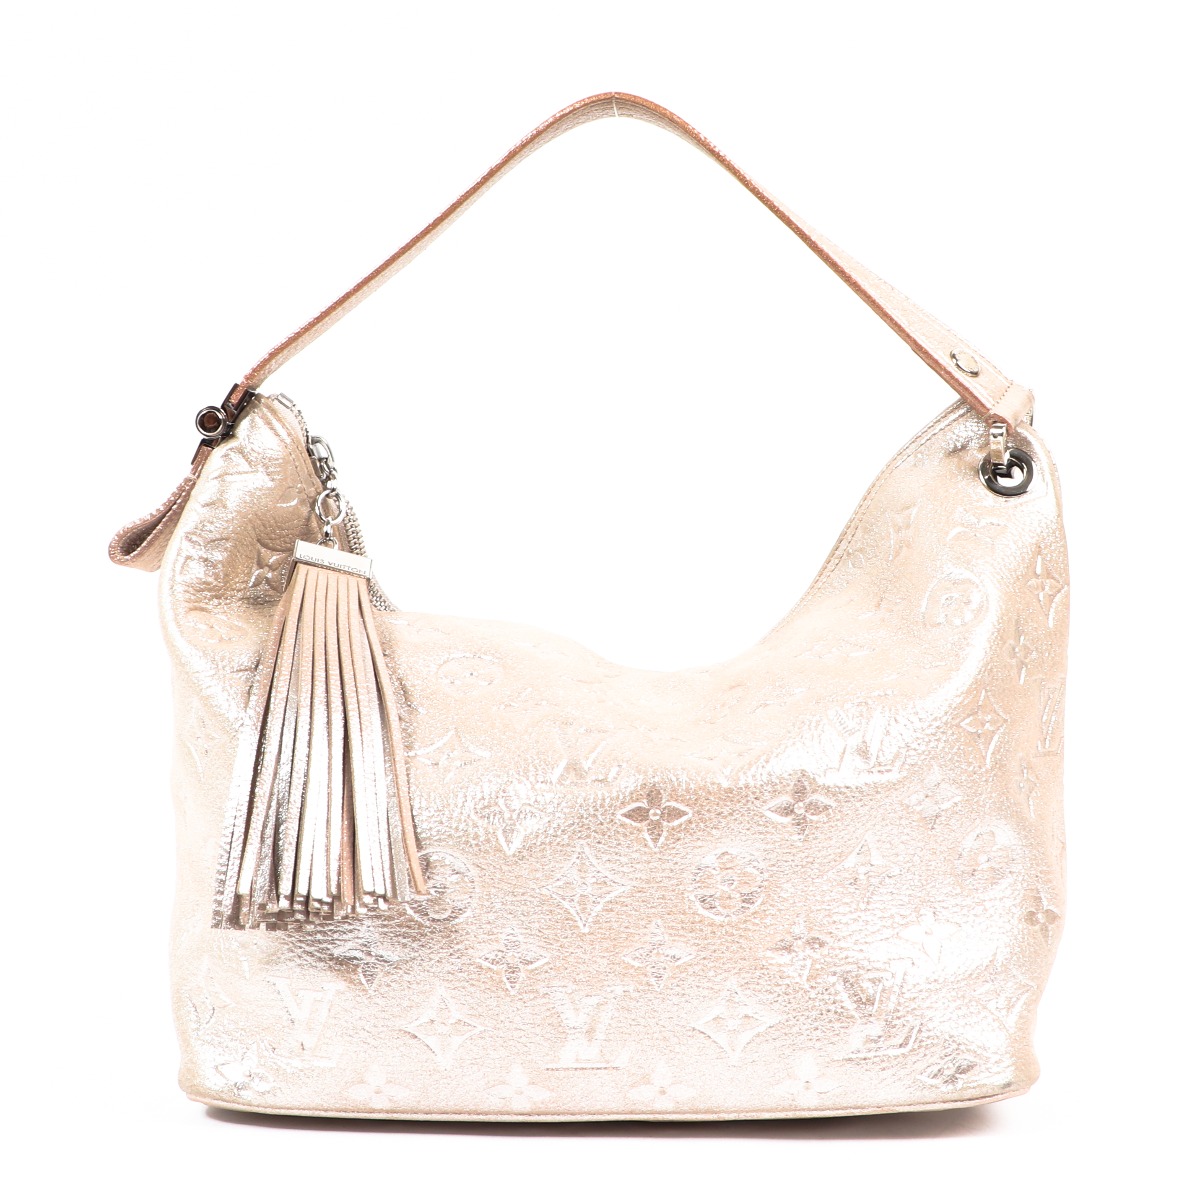 2 in 1 REVERSIBLE Louis Vuitton Bag! #luxury #fashion #neverfull  #louisvuitton #fashionhack 